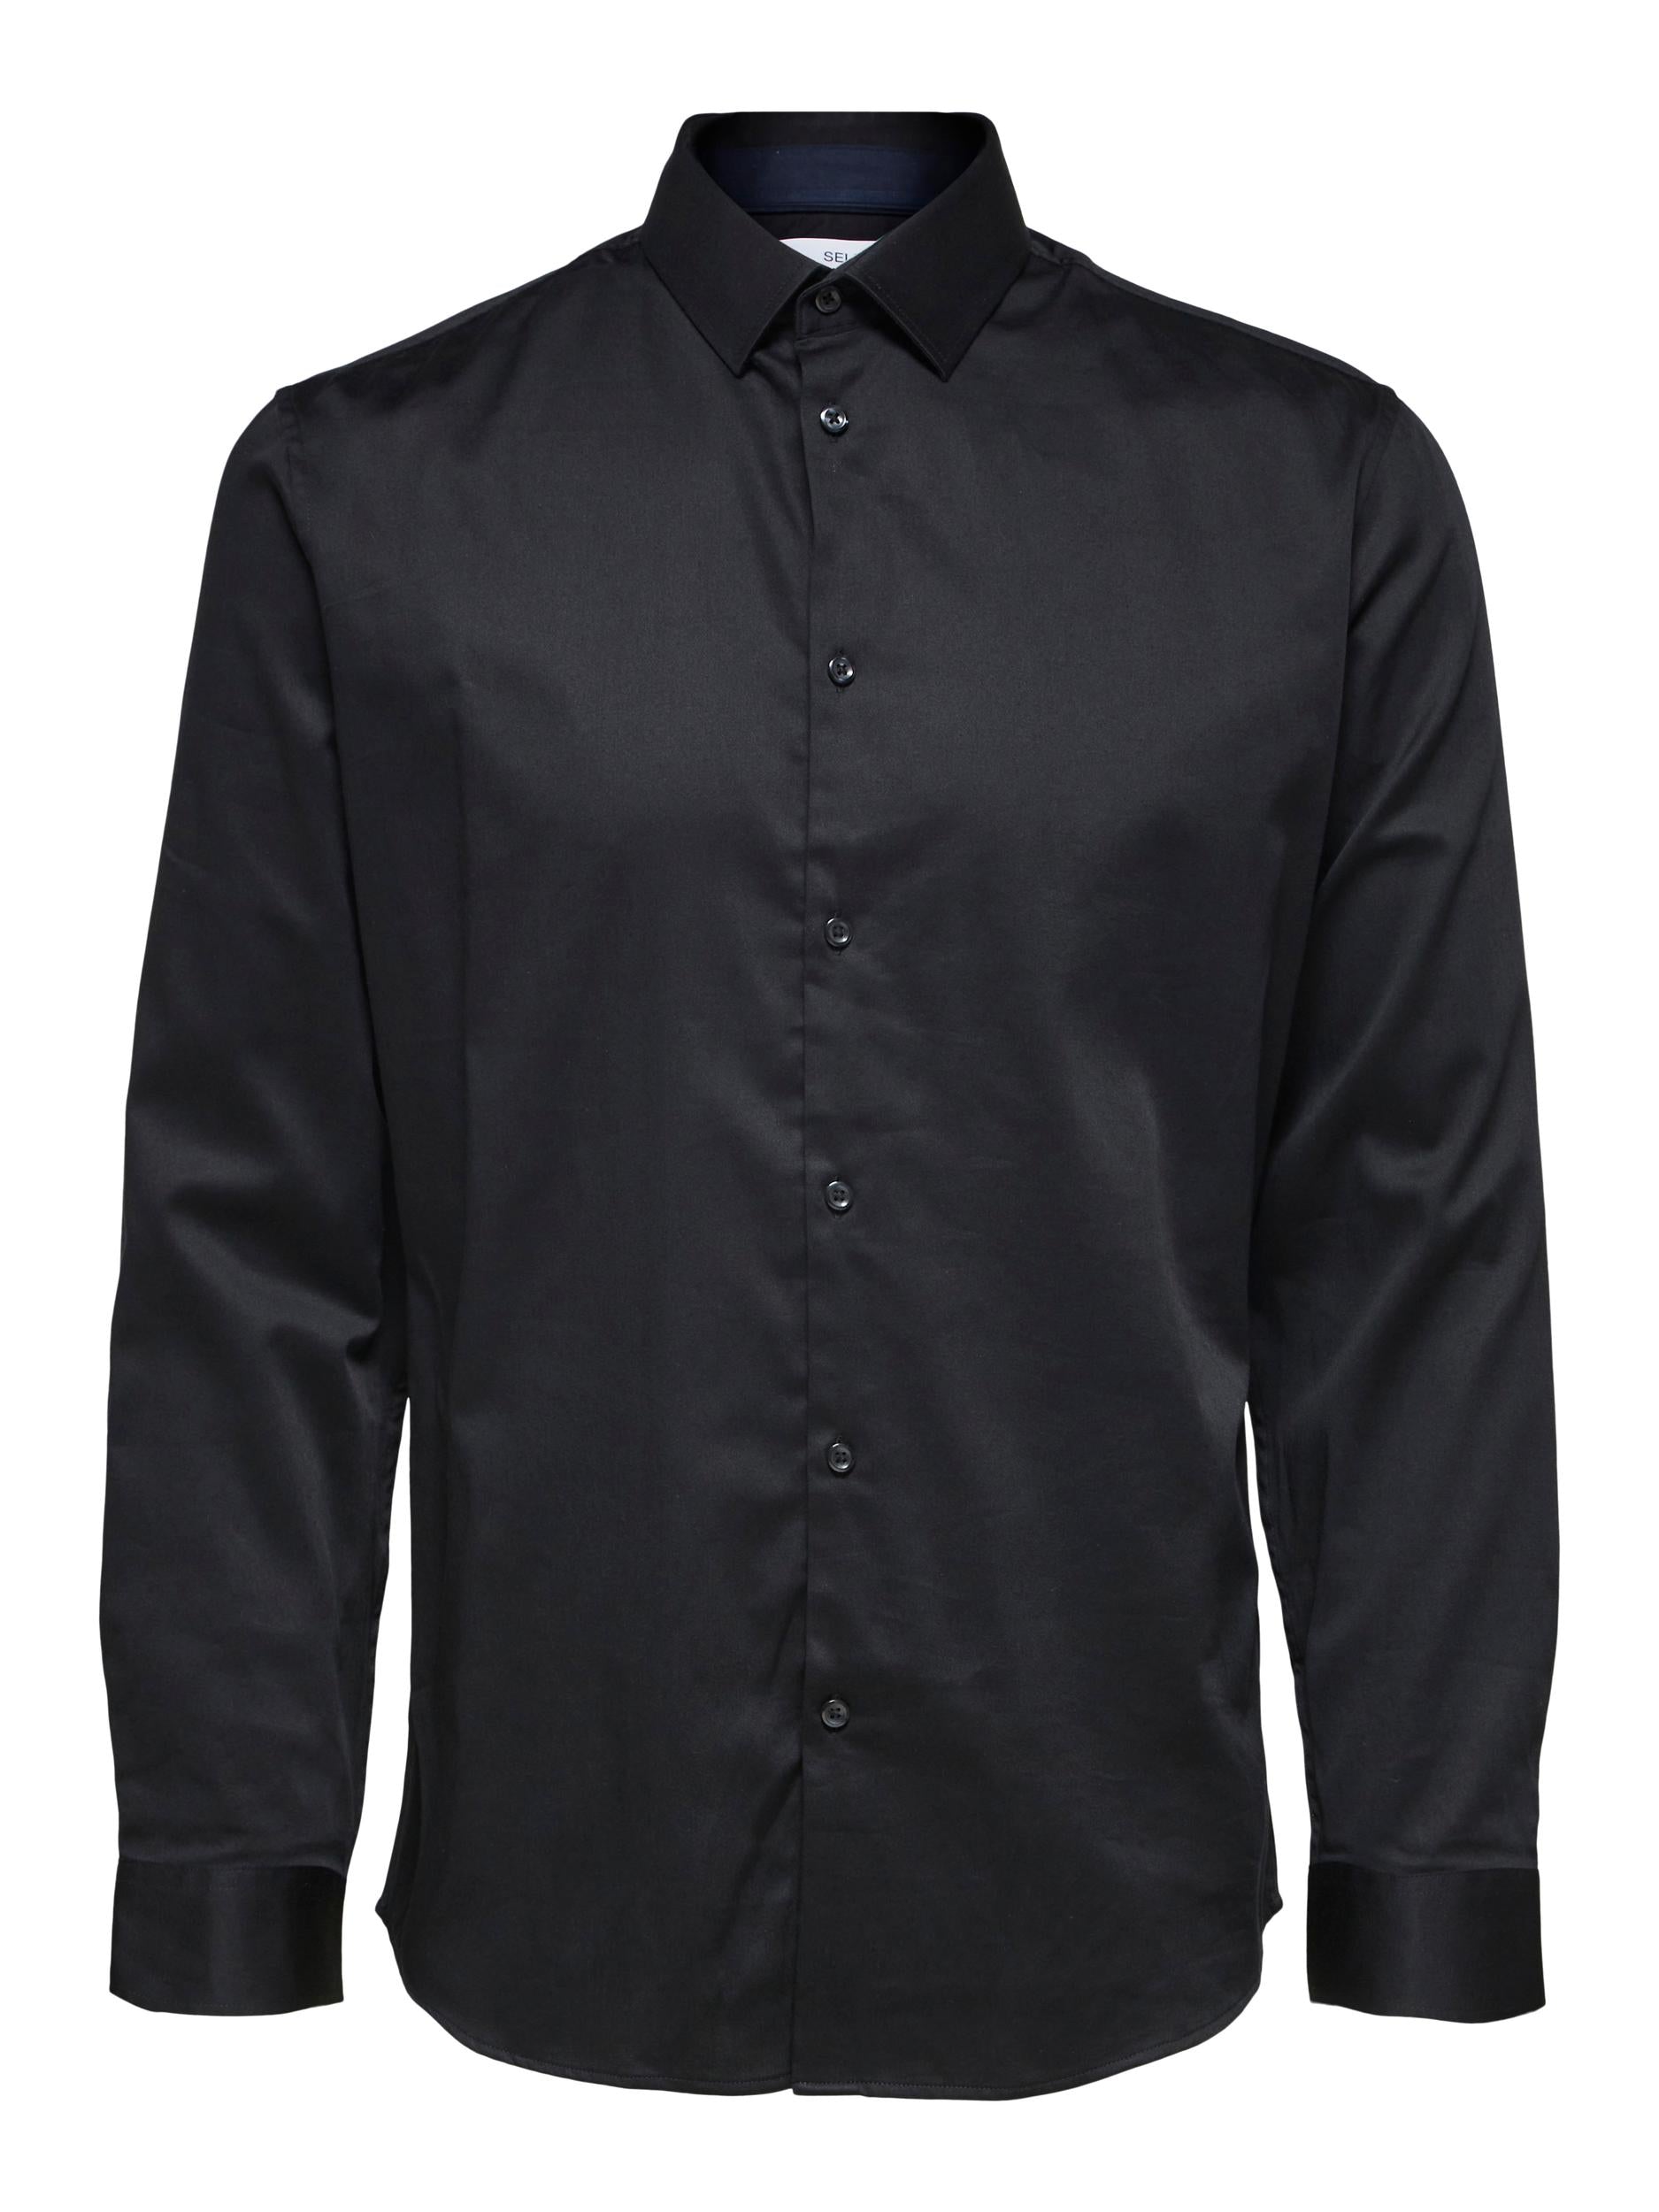 black long sleeve shirt